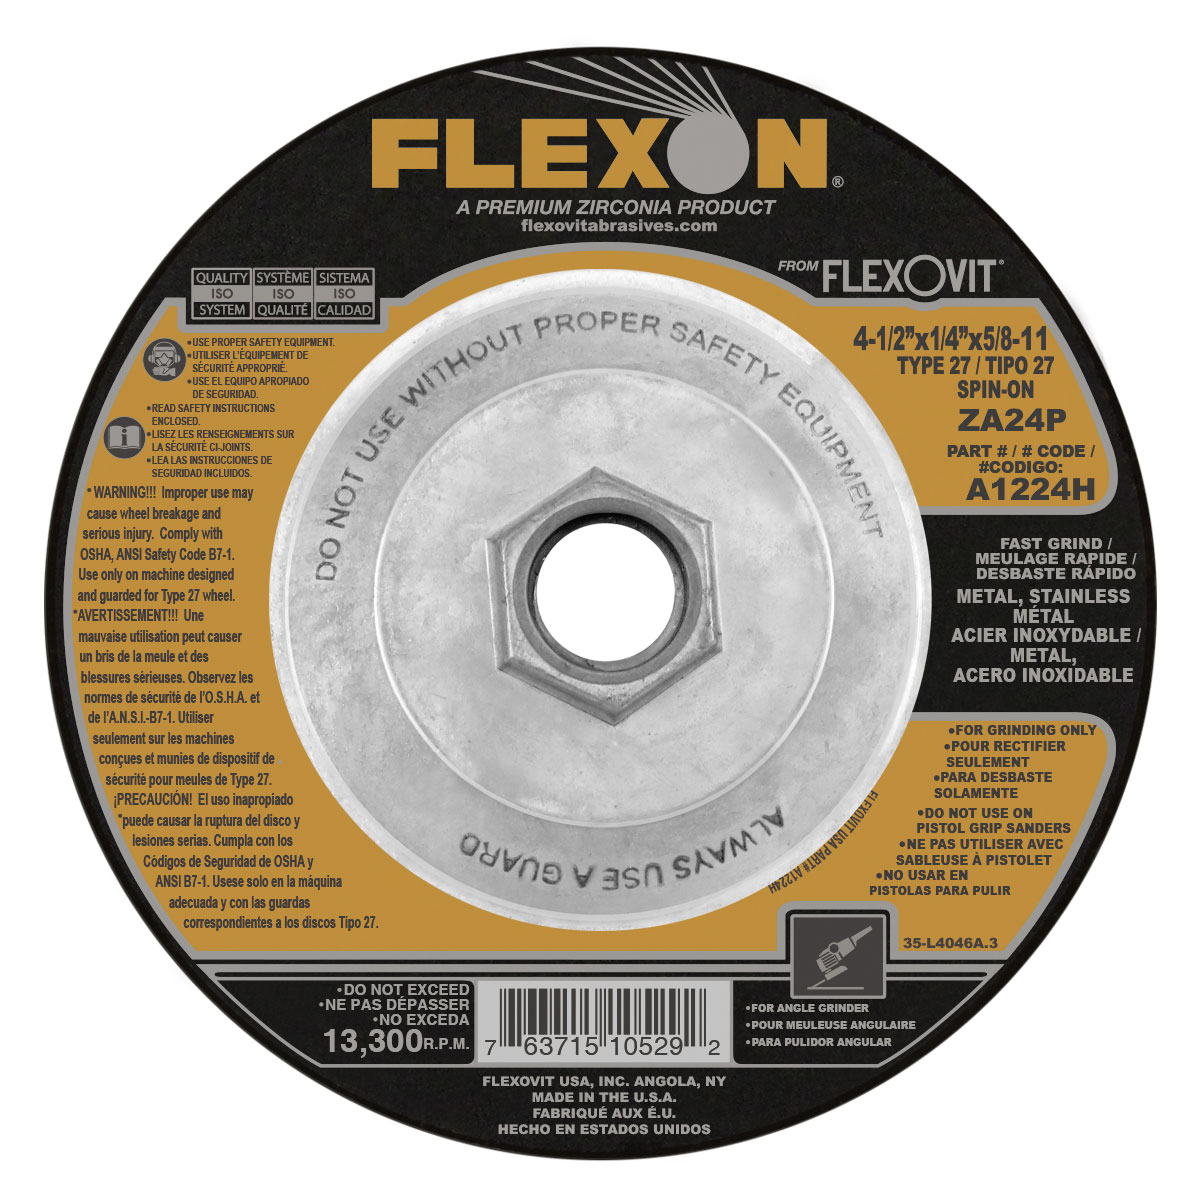 On Flexovit Type Item USA, Wheel # 27 A1224H, Grinding